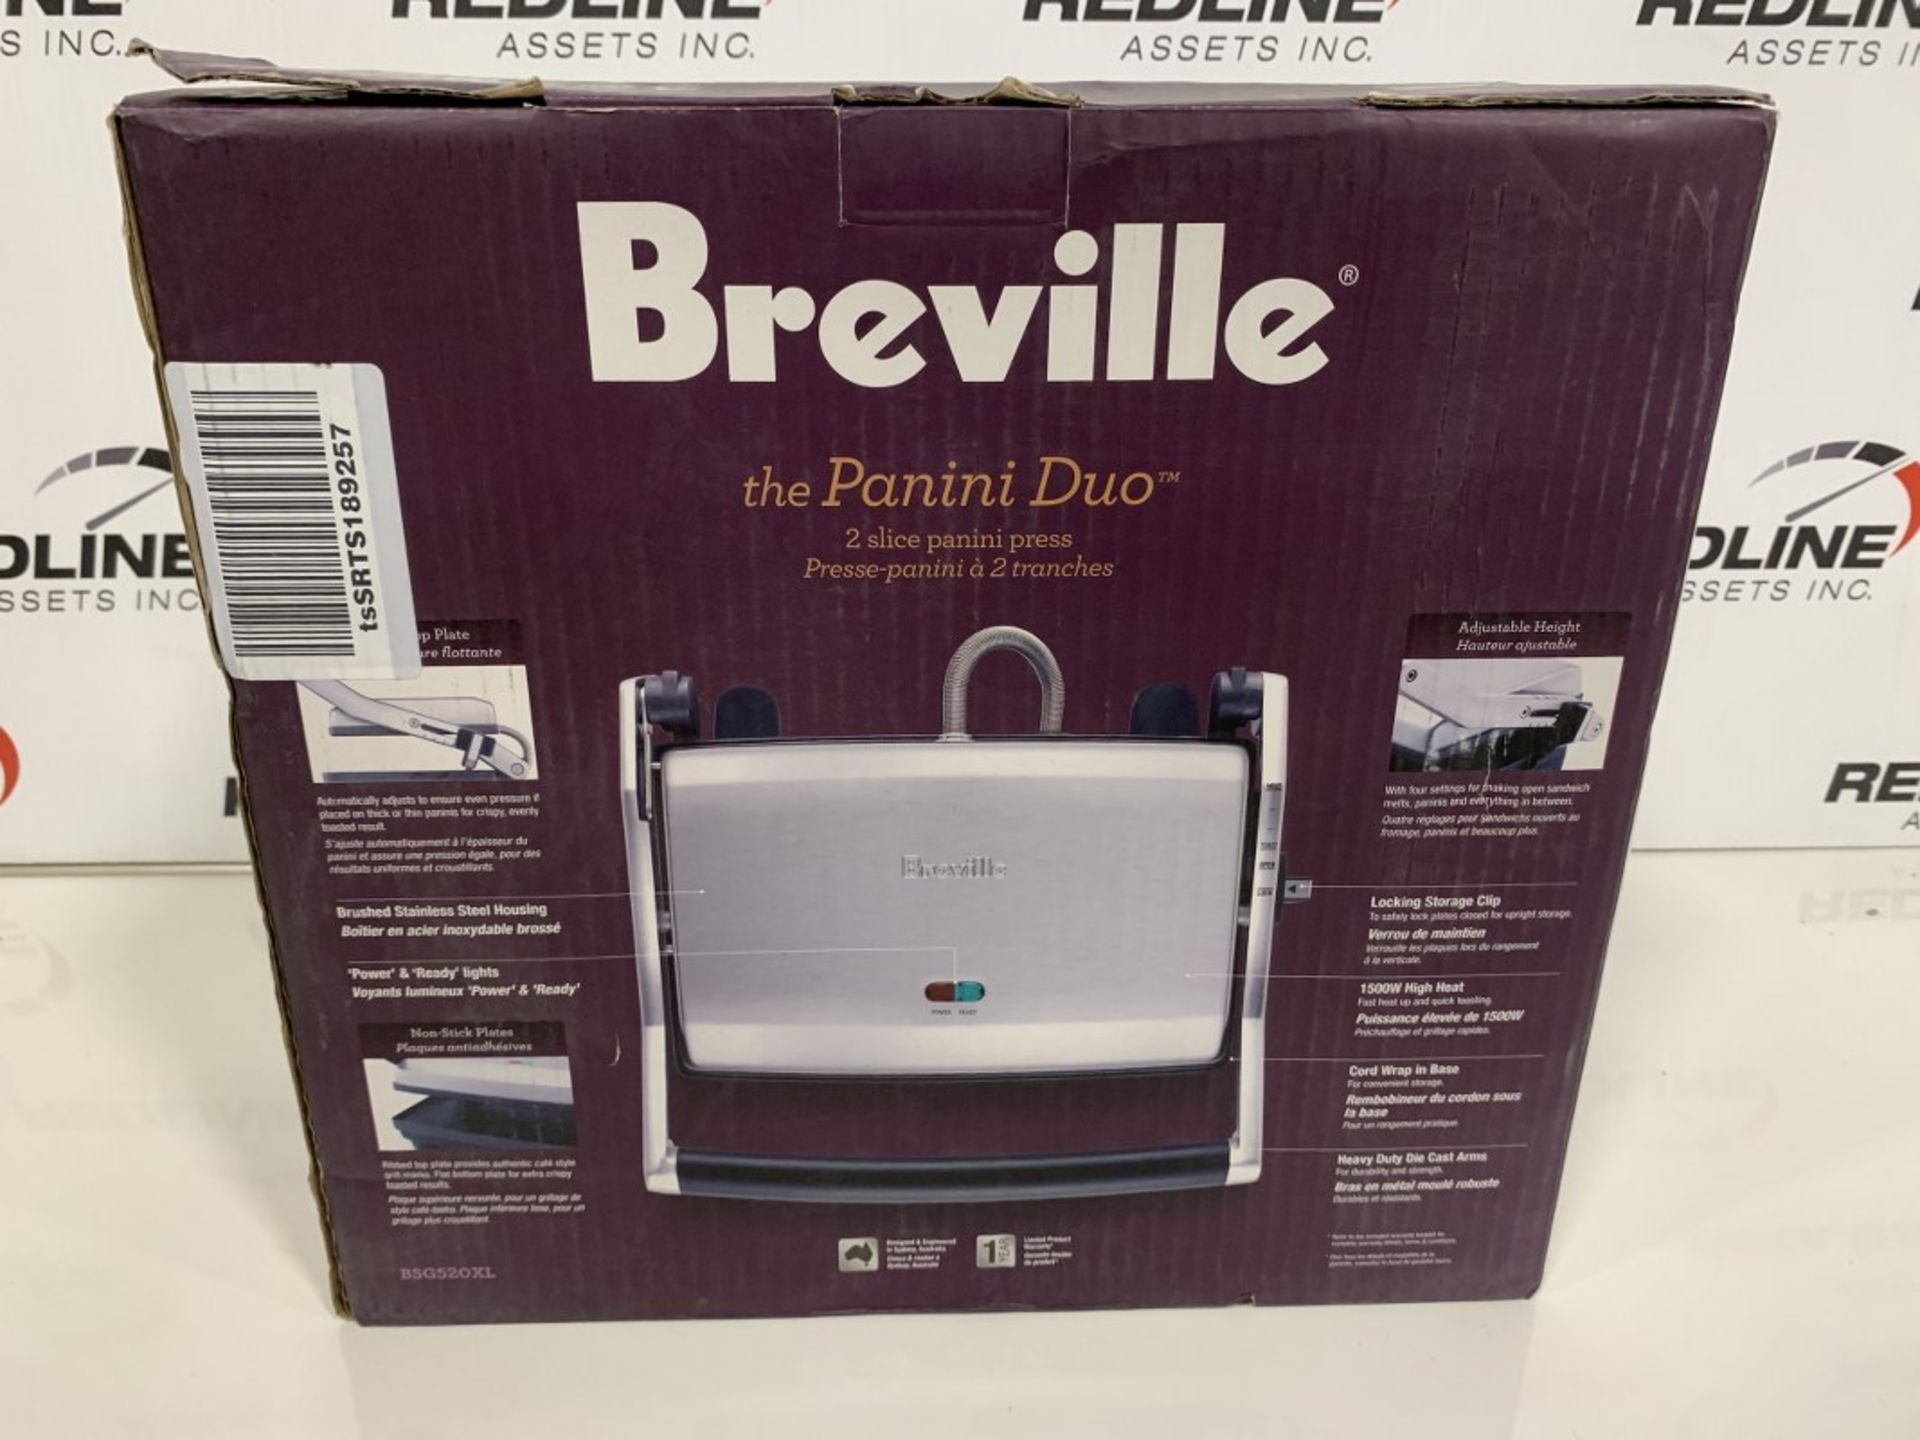 BREVILLE - THE PANINI DUO - 2 SLICE PANINI PRESS - Image 2 of 3